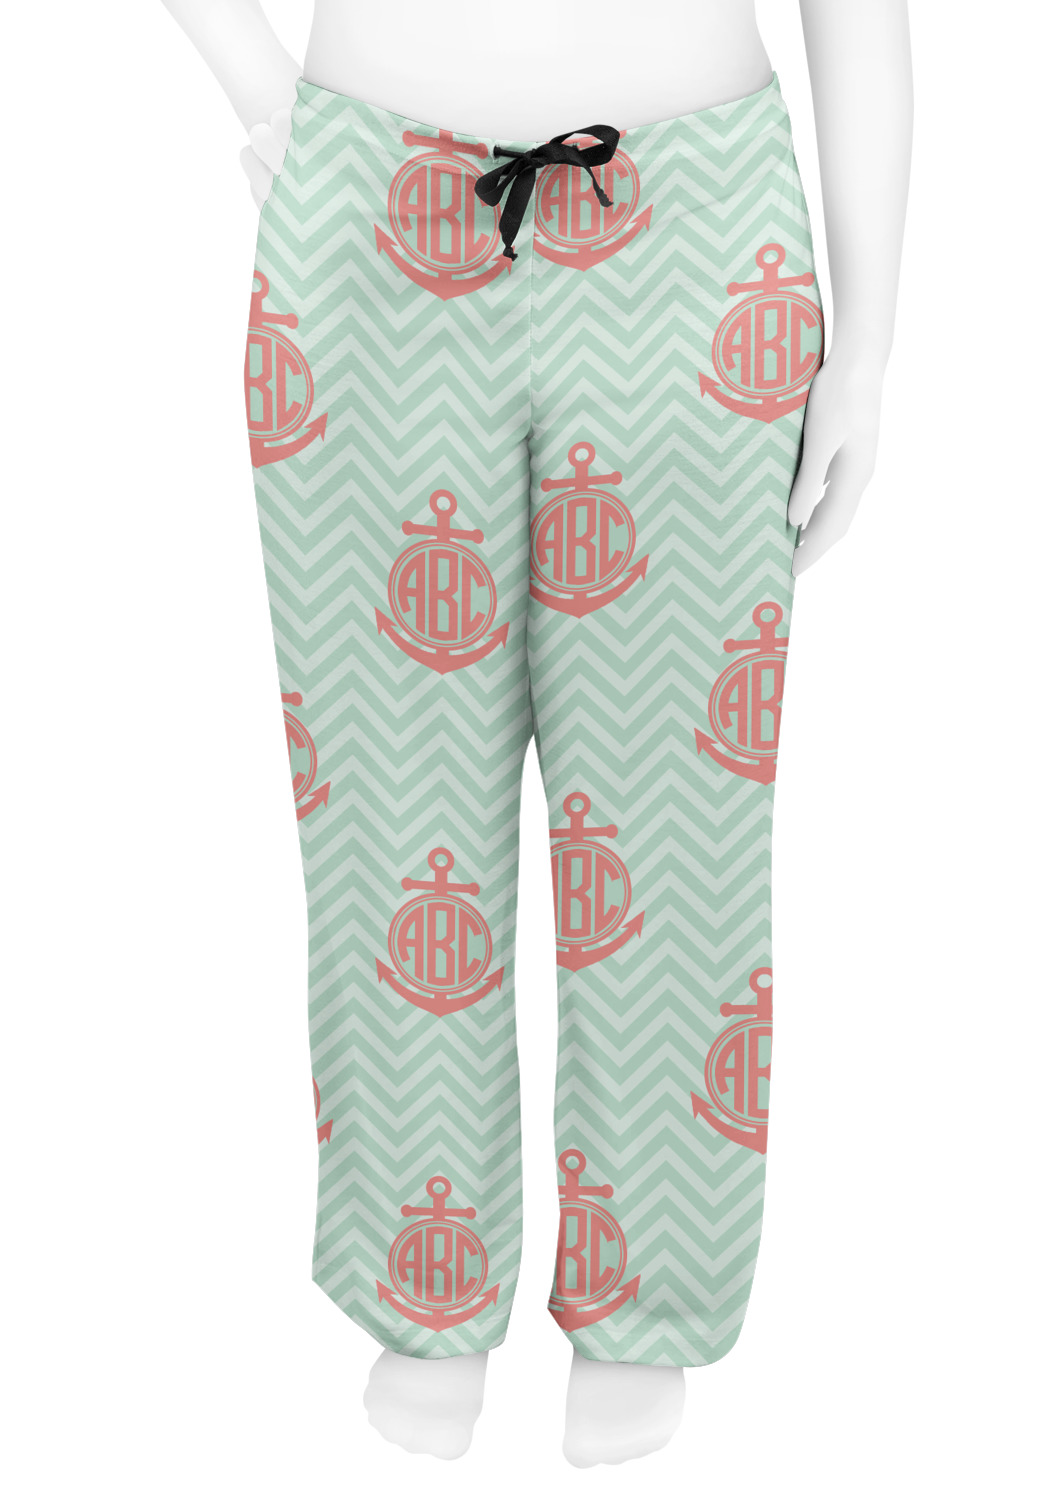 Anchor Pajama/Lounge Pants